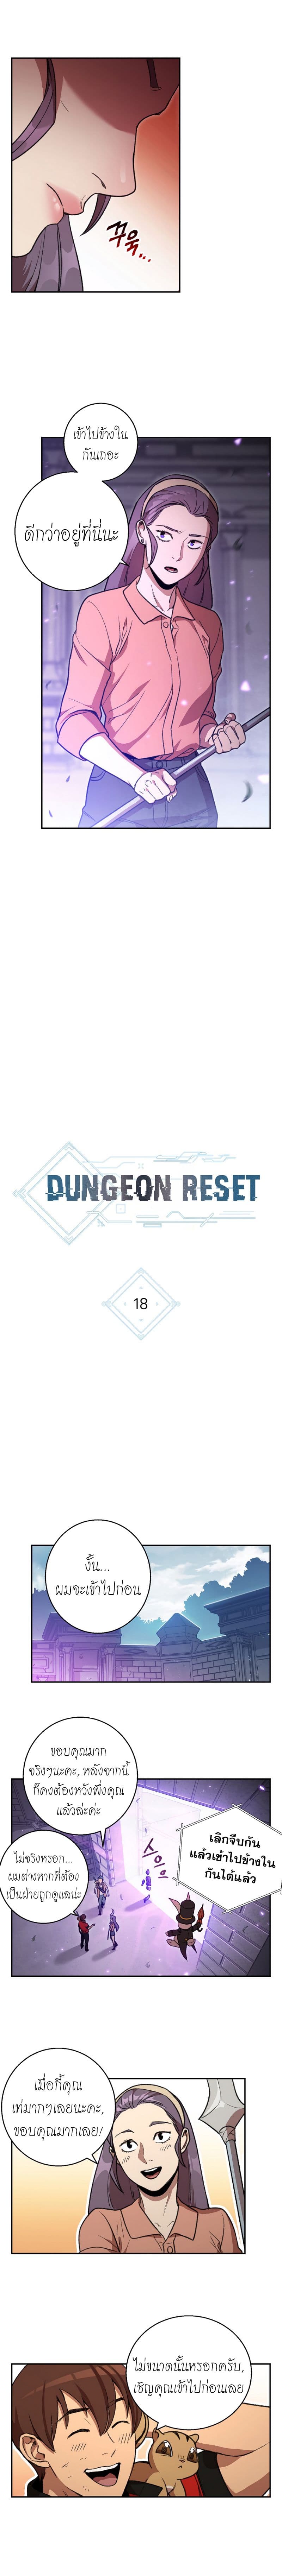 Dungeon Reset18 (3)